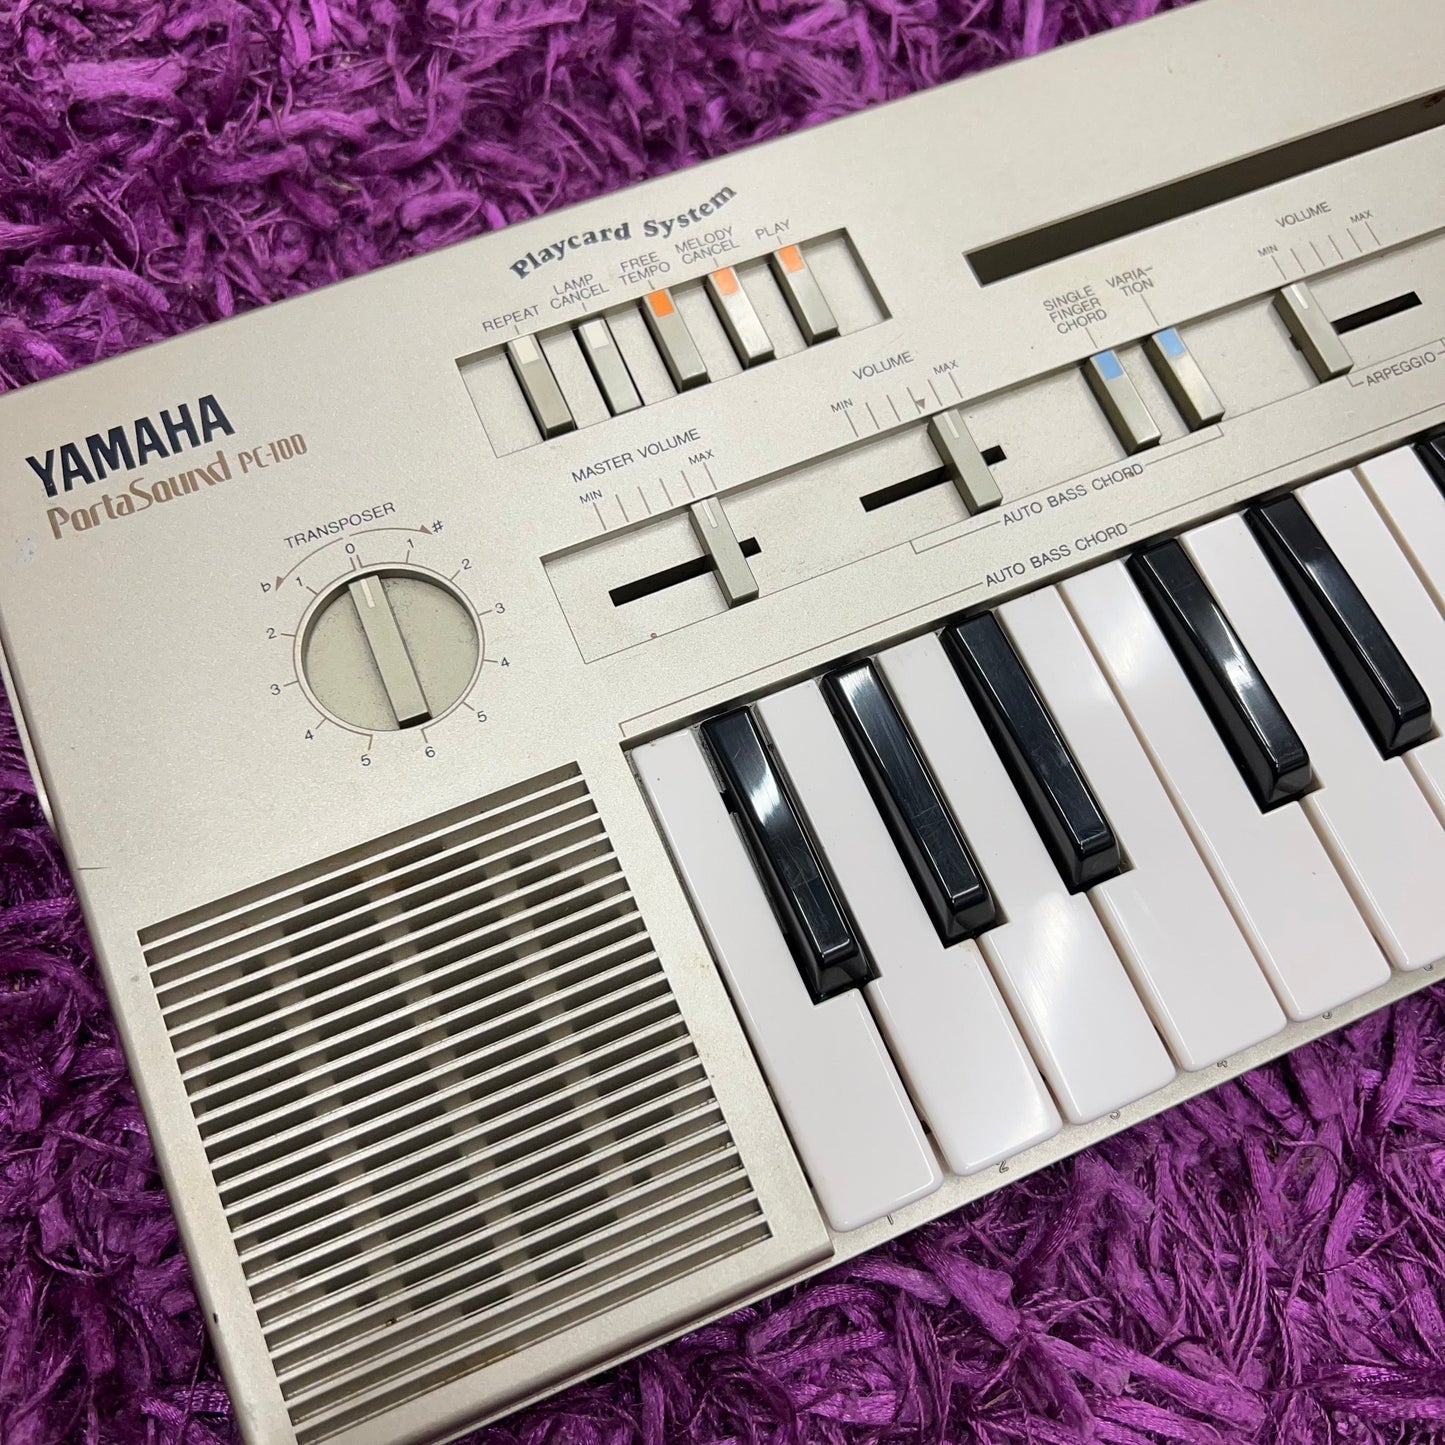 Yamaha PC-100 PortaSound Retro FM Synthesizer (Playcard System)